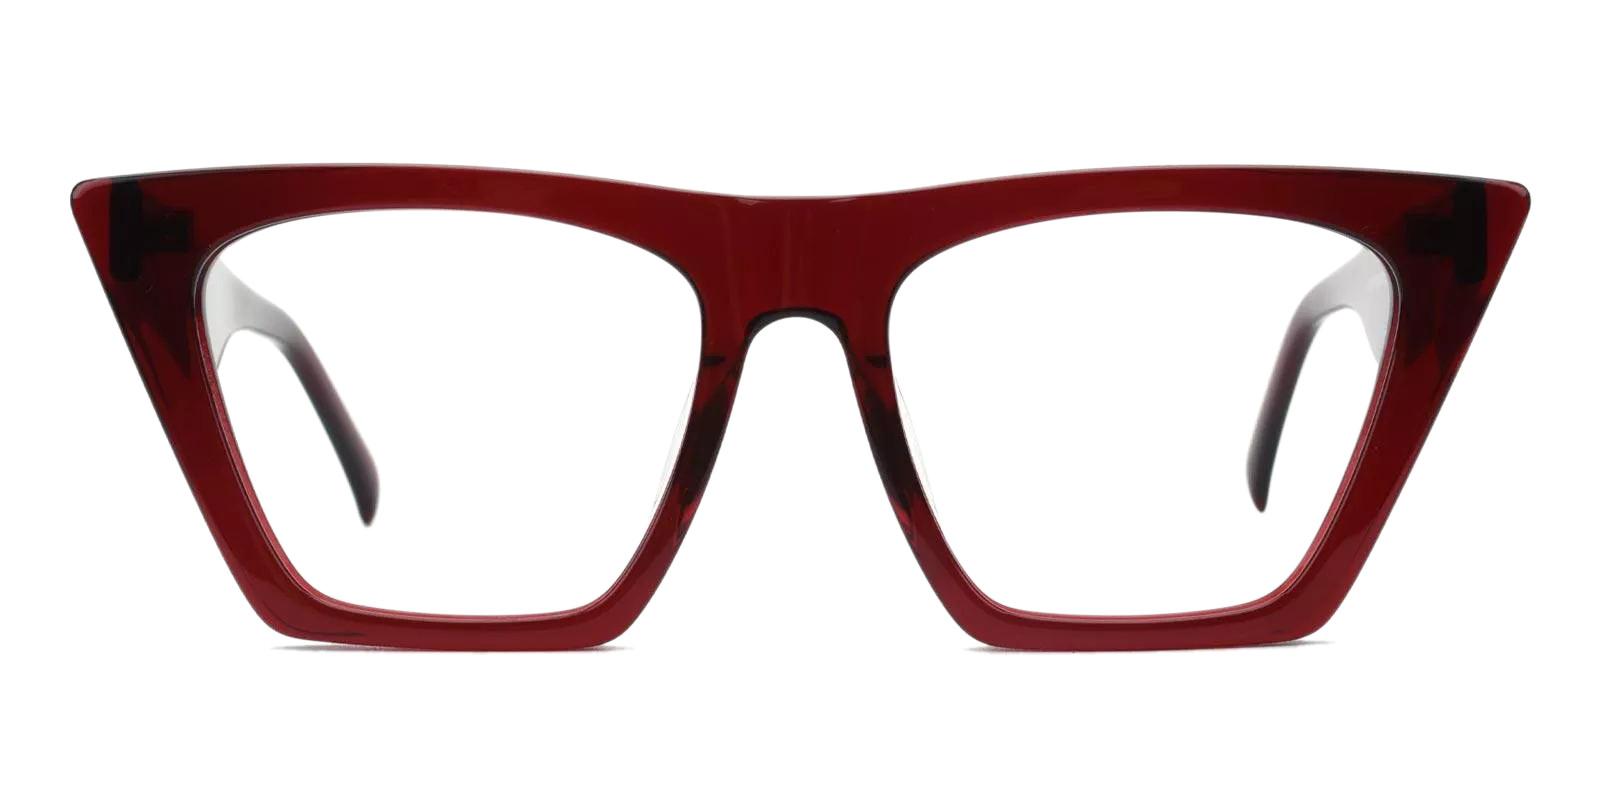 Haley Red Acetate Eyeglasses , Fashion , UniversalBridgeFit Frames from ABBE Glasses